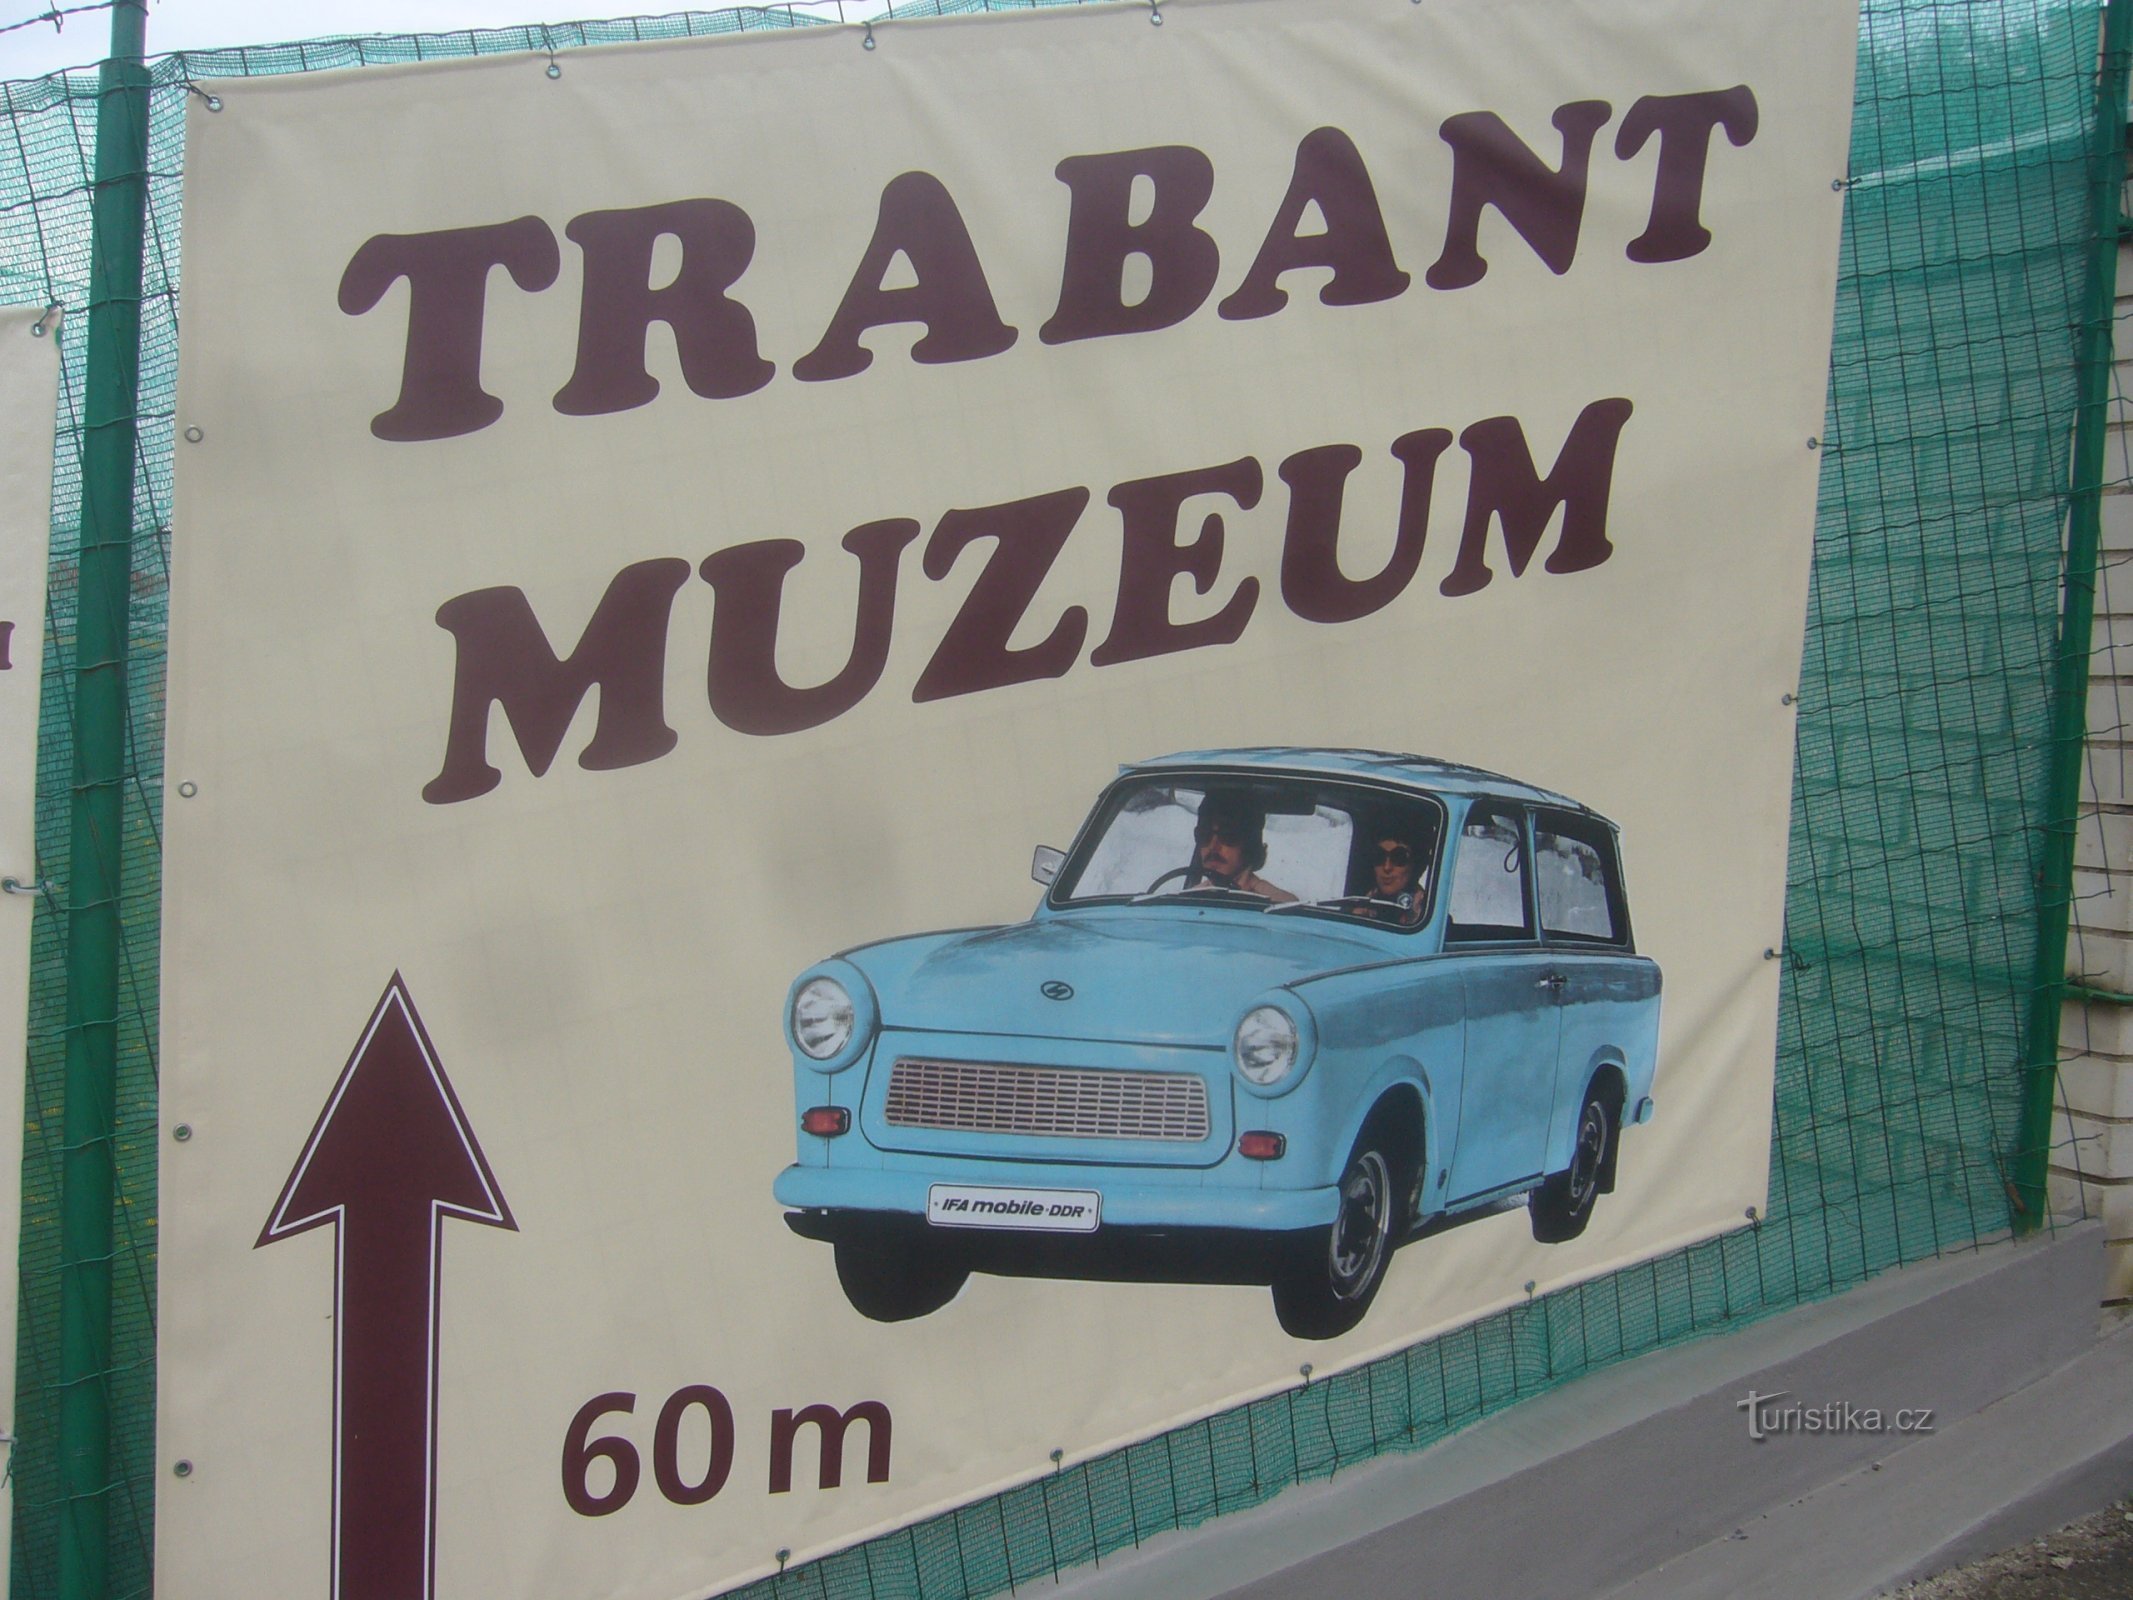 Museo Trabant Motol